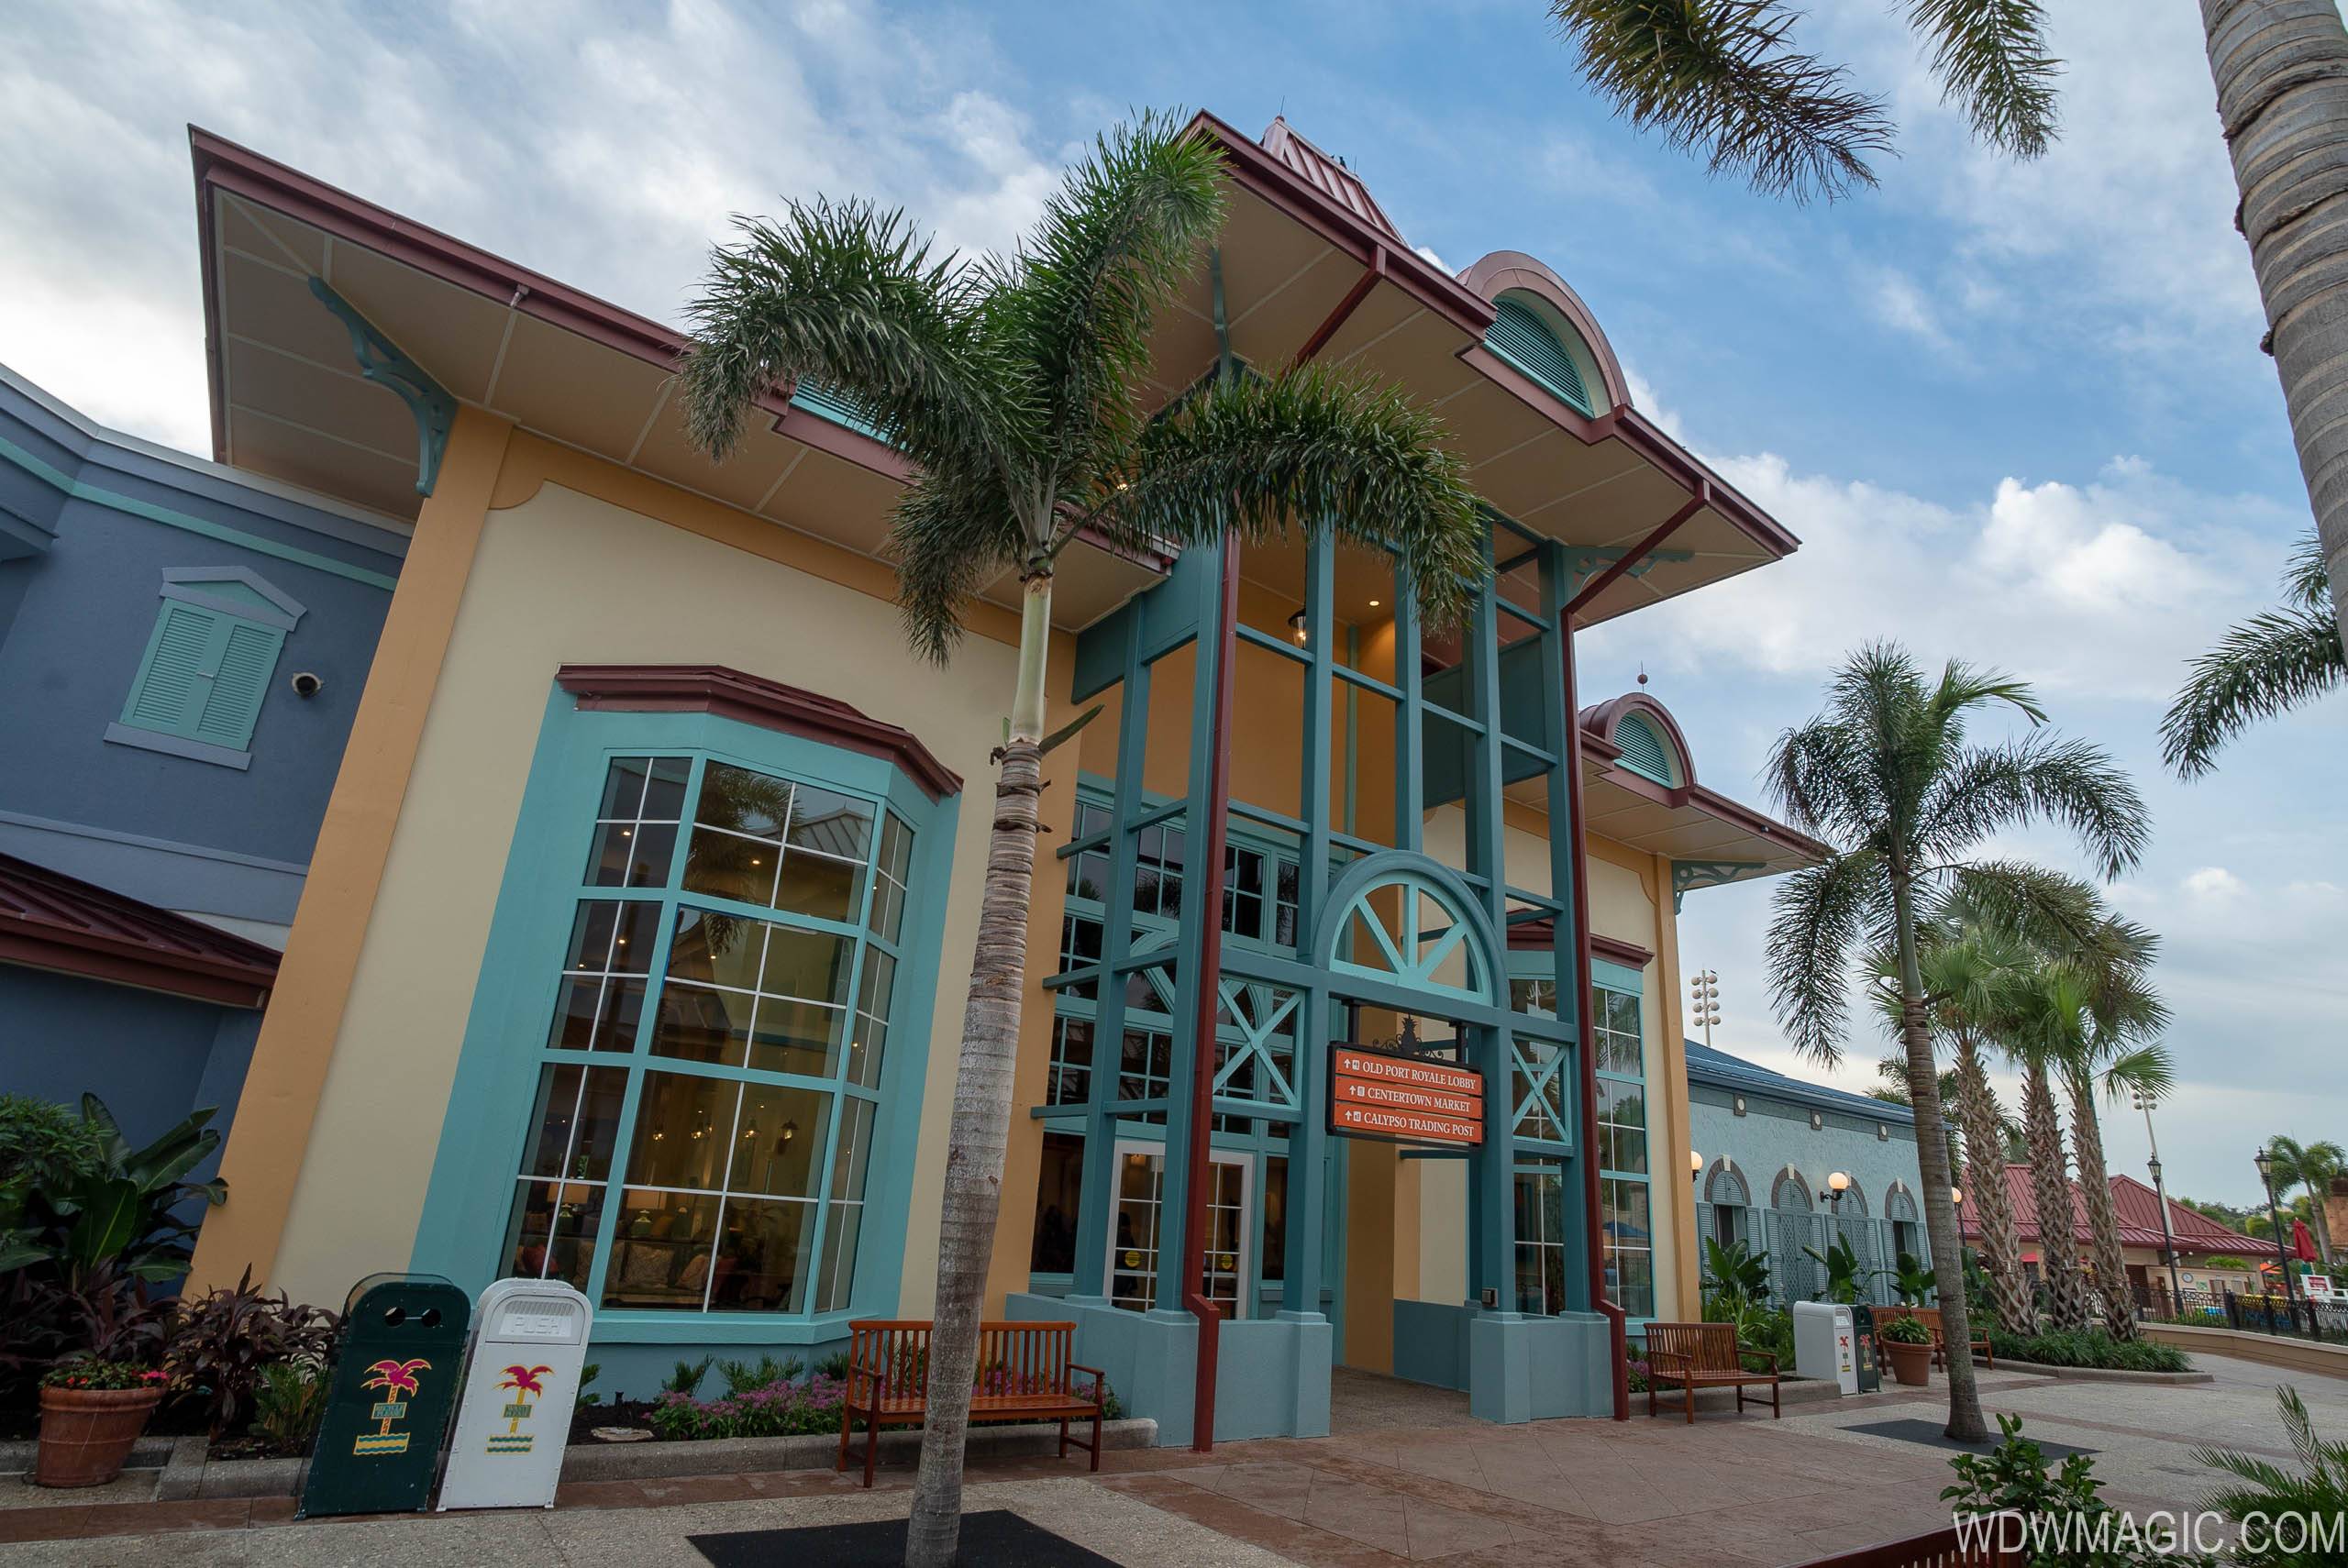 Caribbean Beach Resort completly closing for 3 month refurbishment